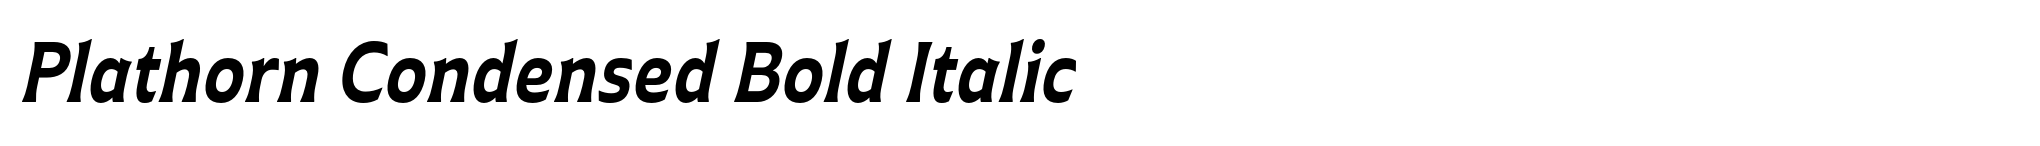 Plathorn Condensed Bold Italic image